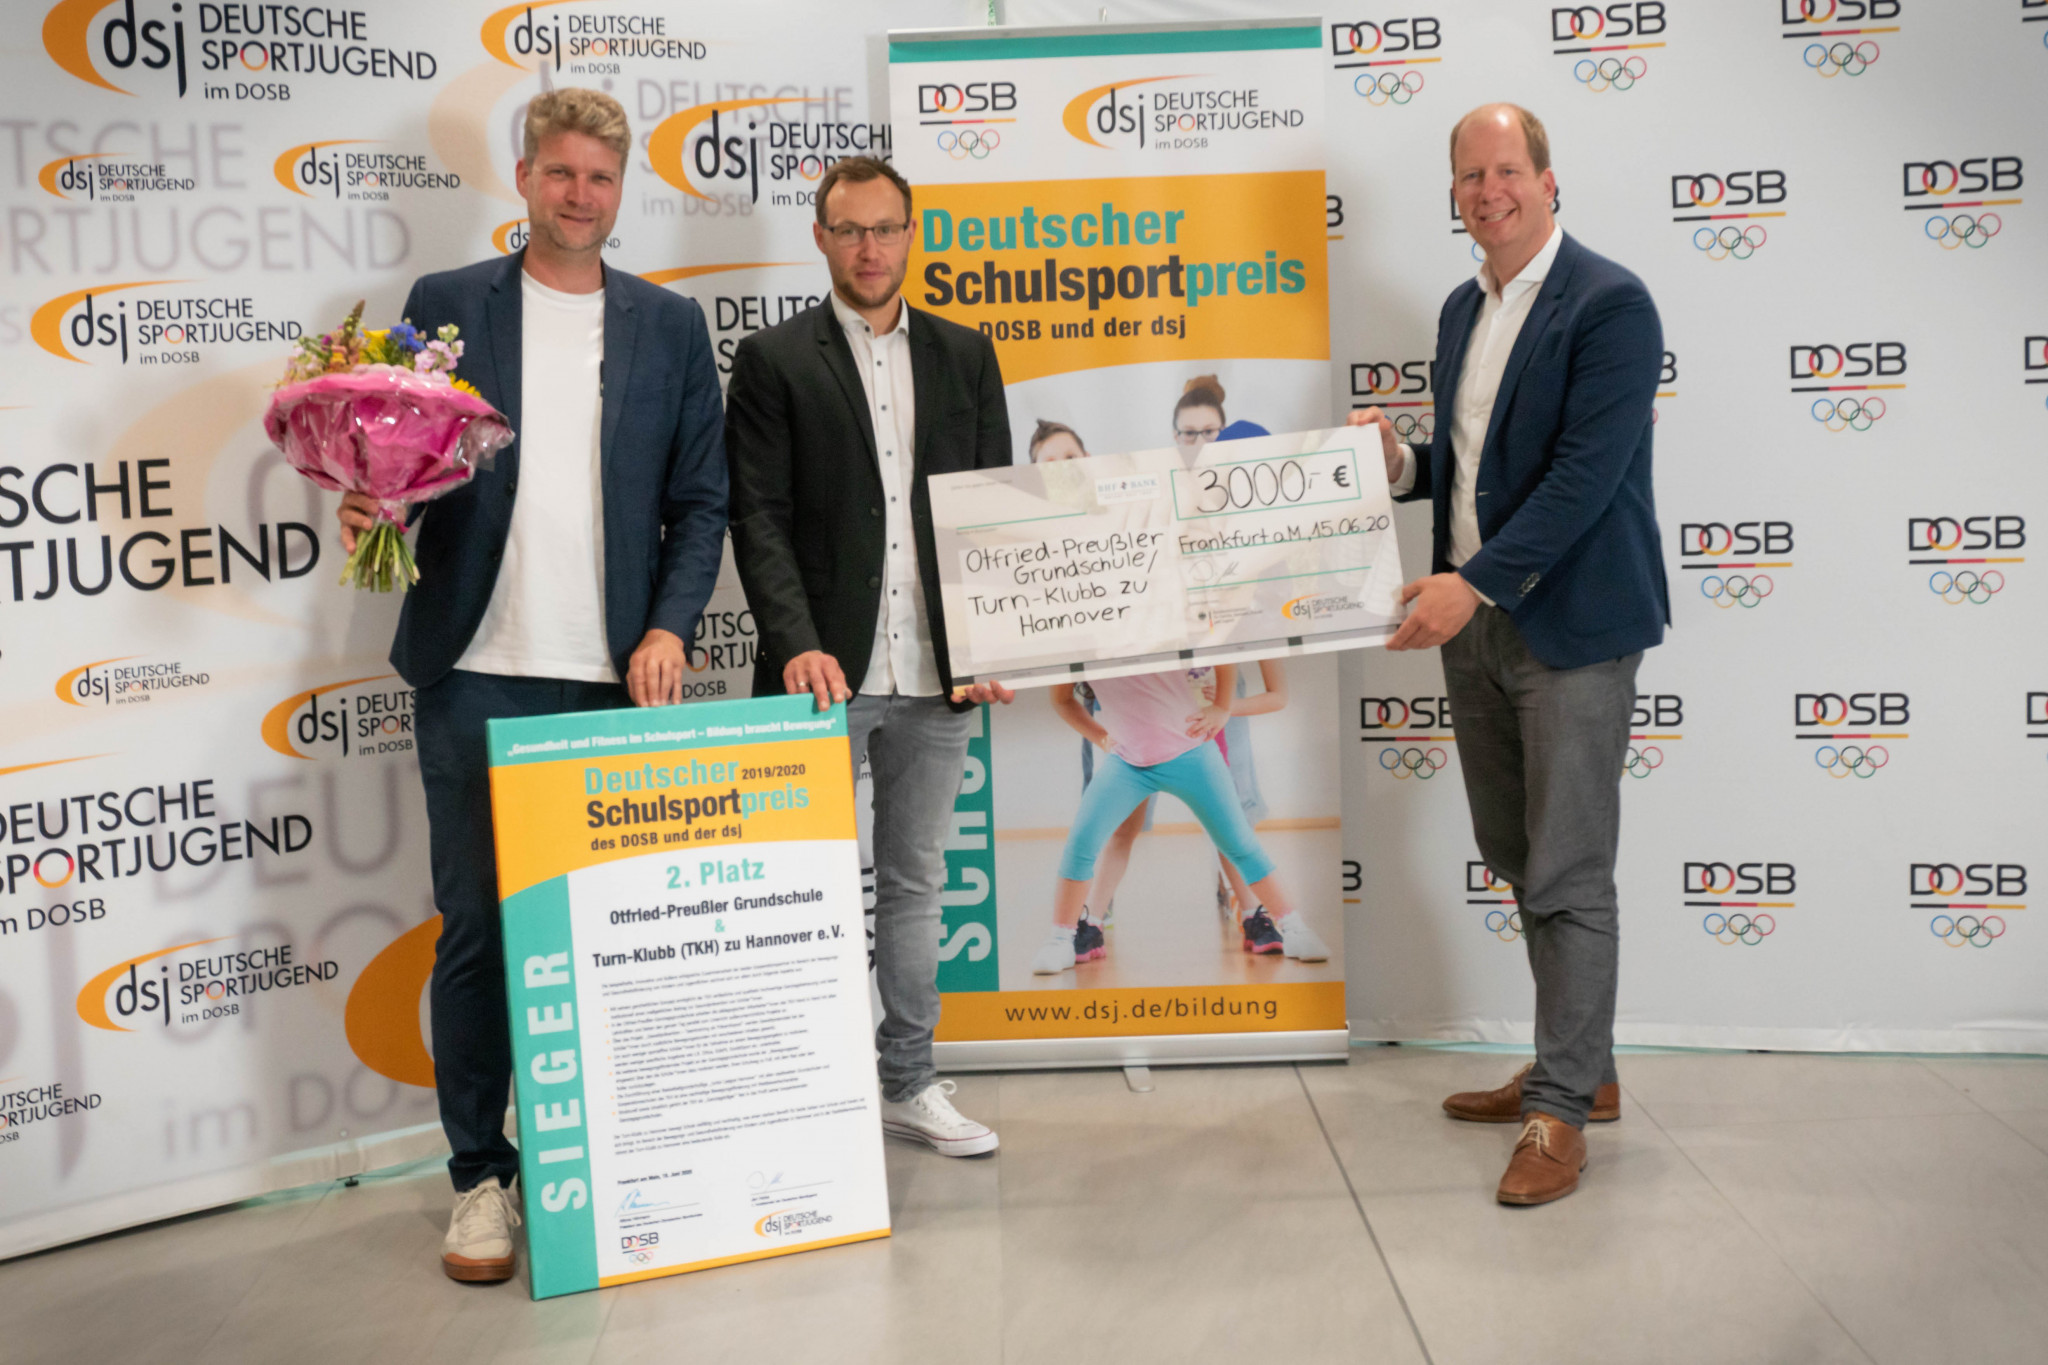 The Otfried Preussler elementary school won second prize in DOSB's school sports awards ©DOSB